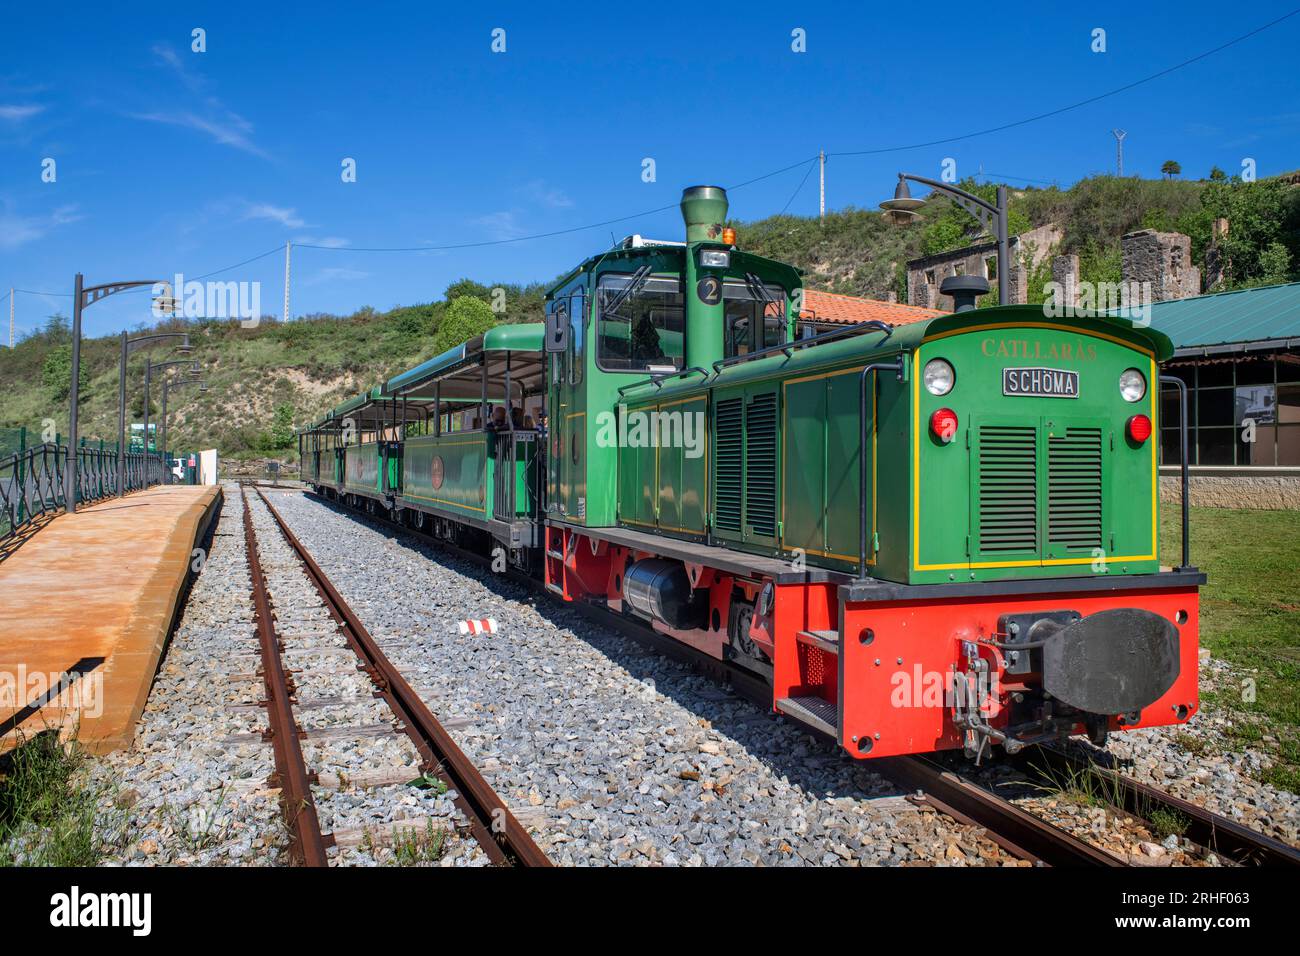 Tren del Ciment, at Pobla de Lillet station, La Pobla de Lillet, Castellar de n´hug, Berguedà, Catalonia, Spain.   The Tren del Ciment is a line that Stock Photo